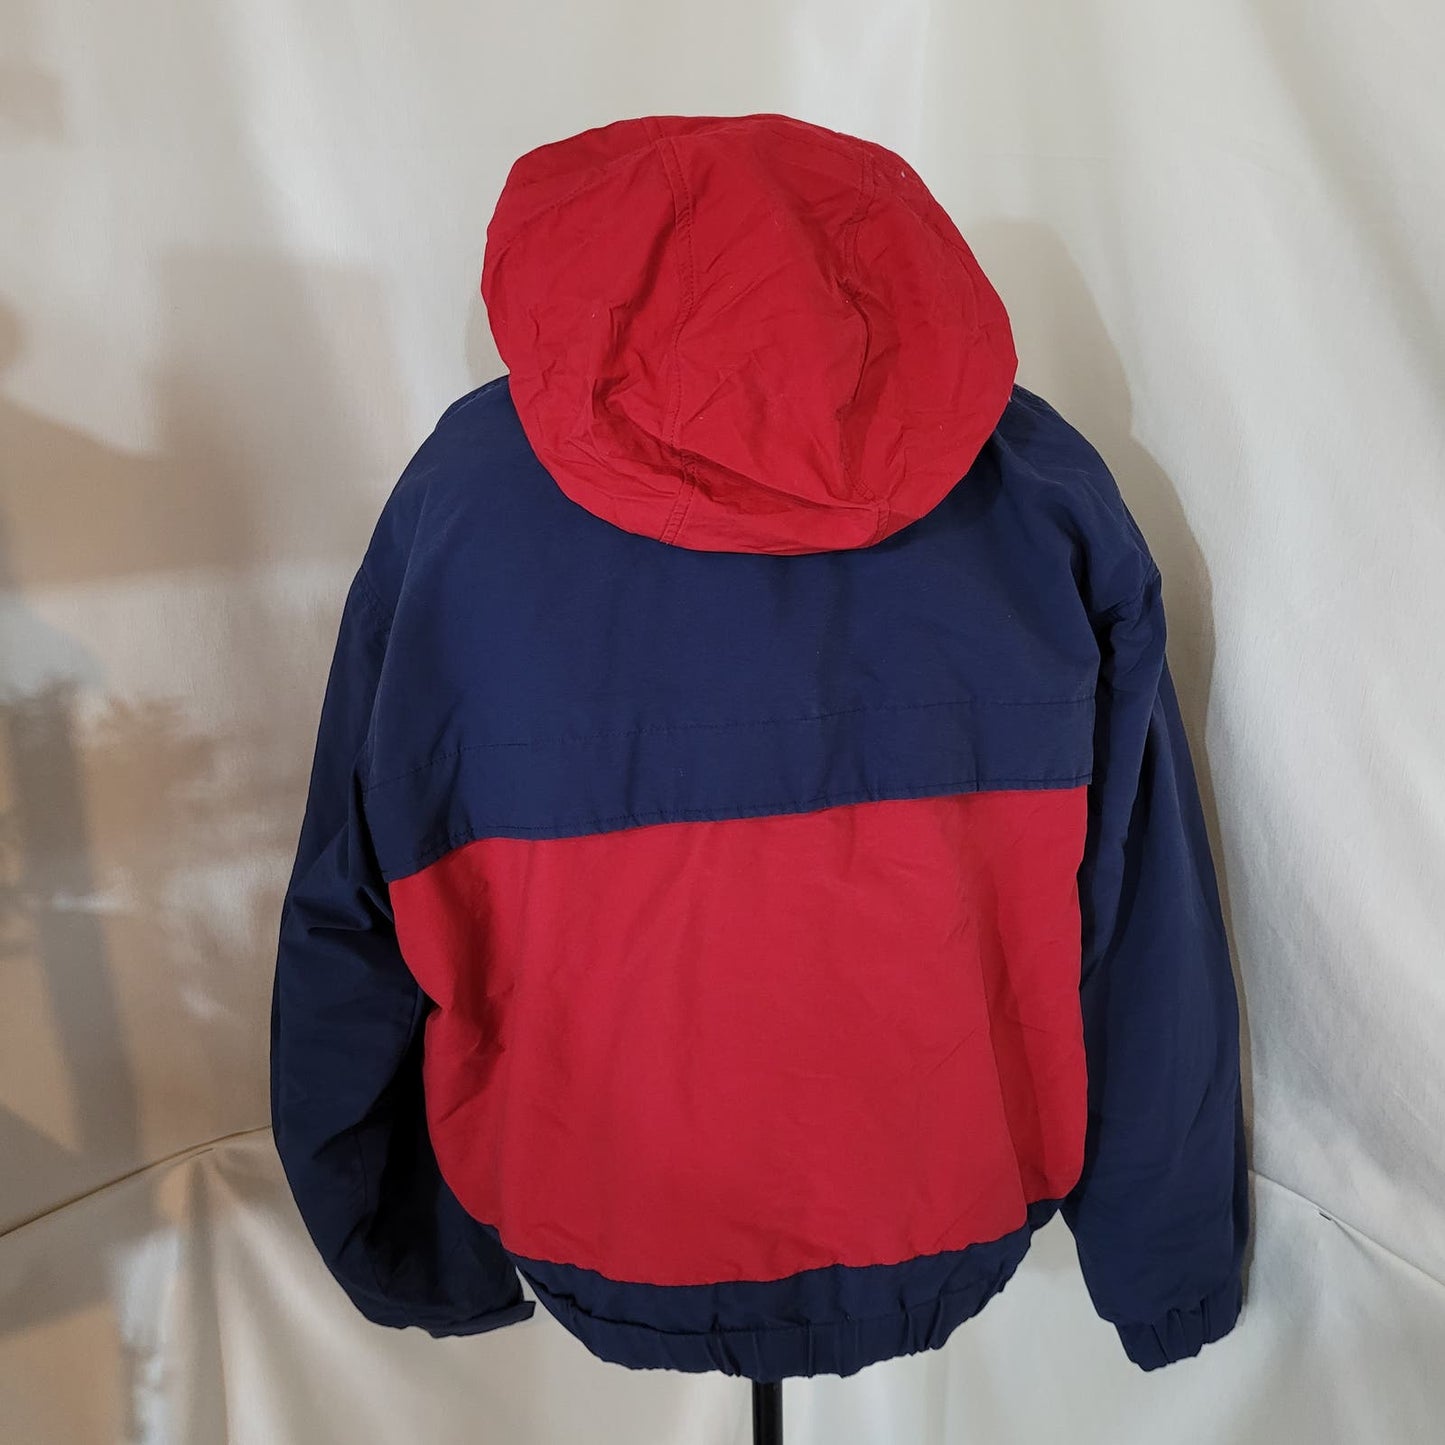 Vintage 90s Tommy Hilfiger Winter Jacket - Size Medium